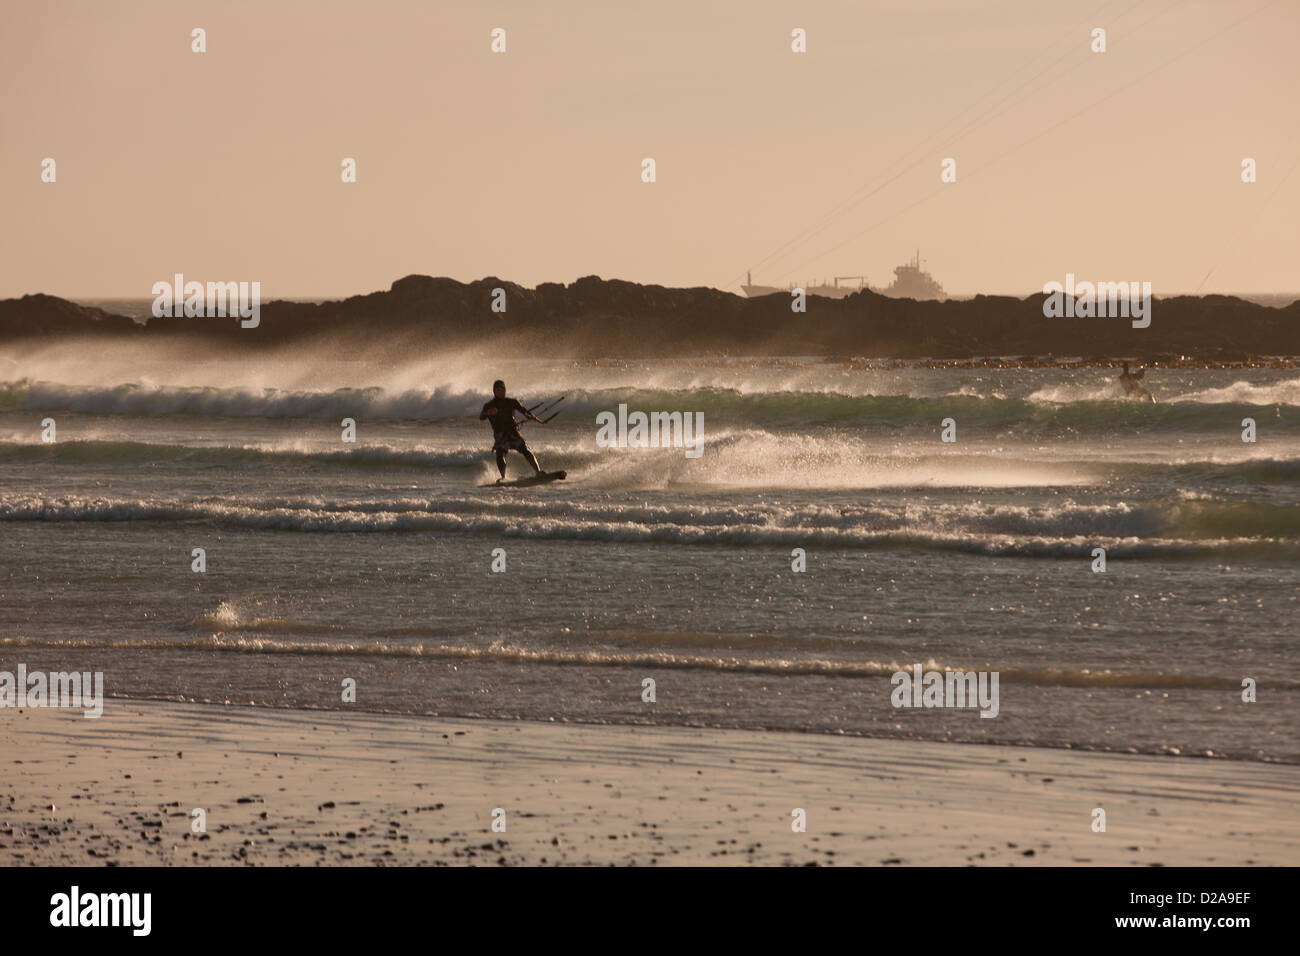 Man windsurfing in waves Stock Photo